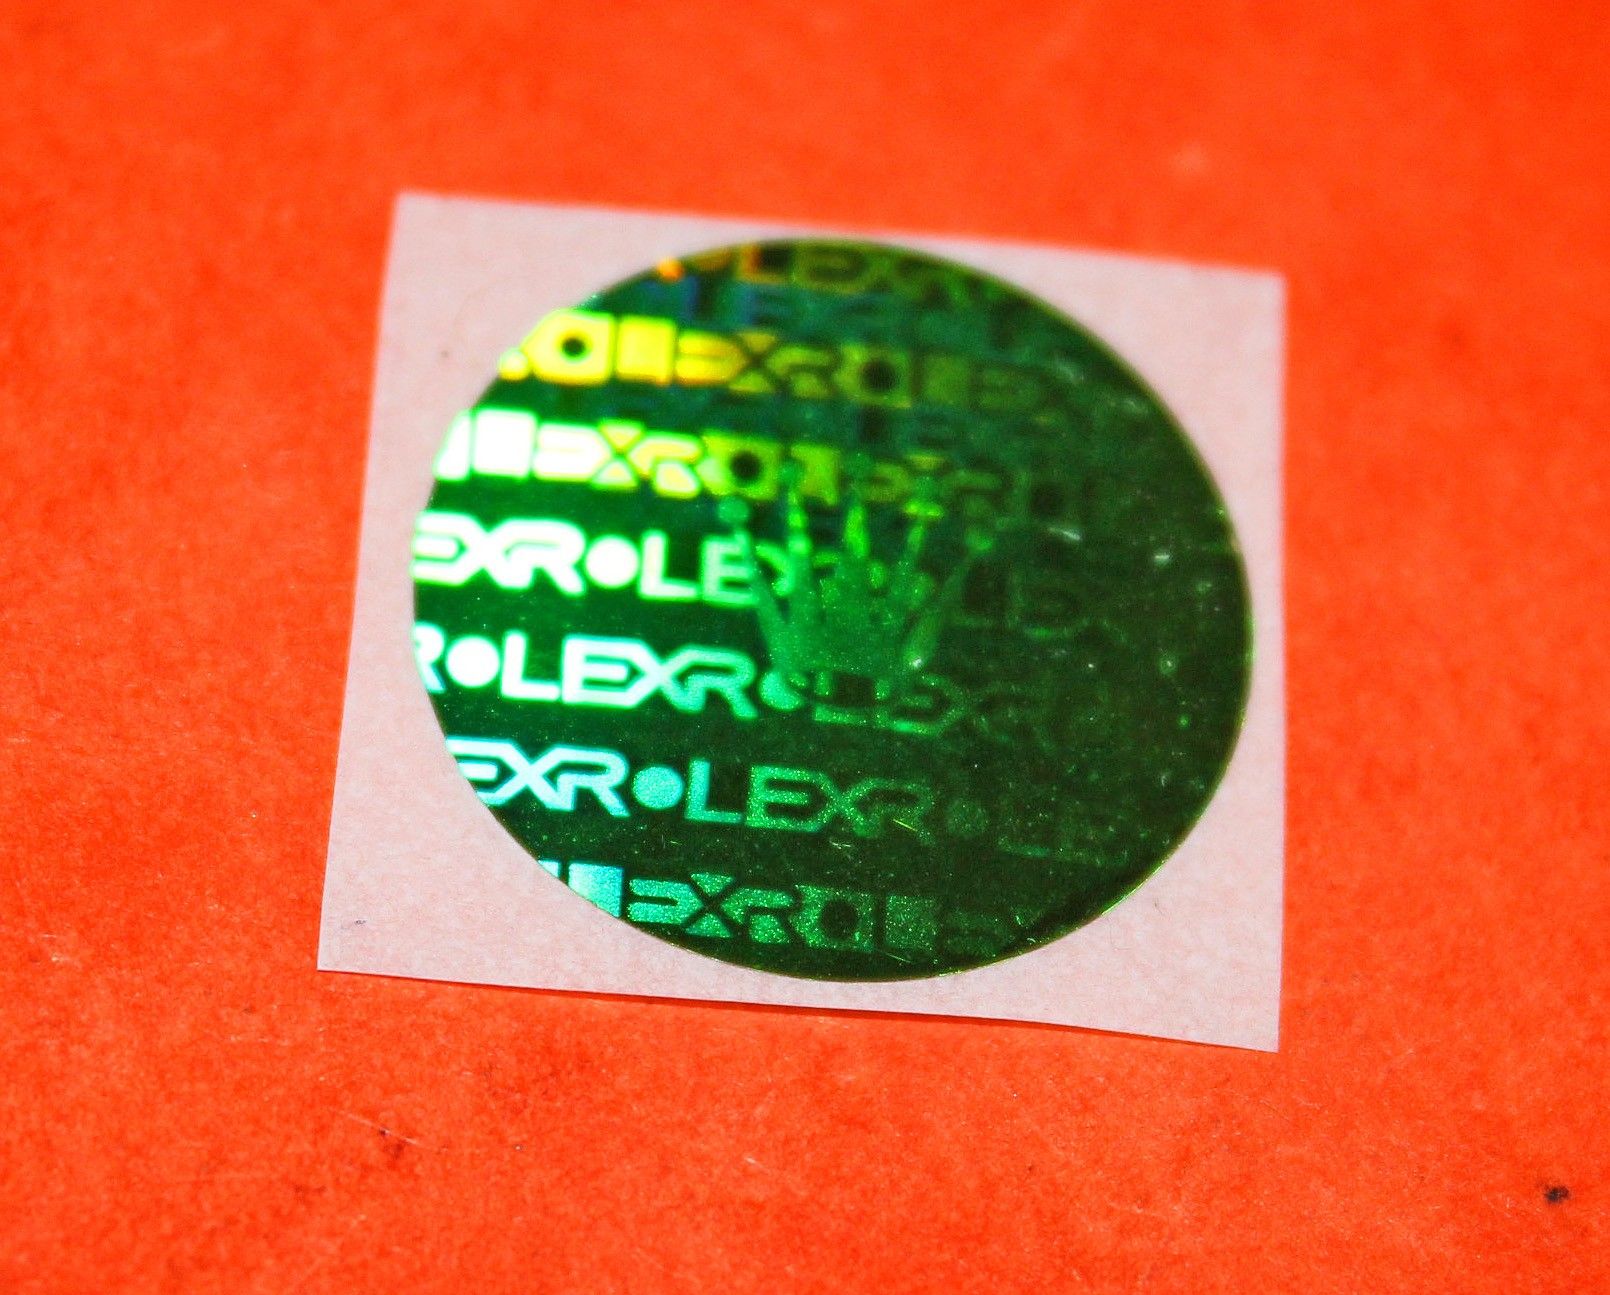 rolex case back sticker